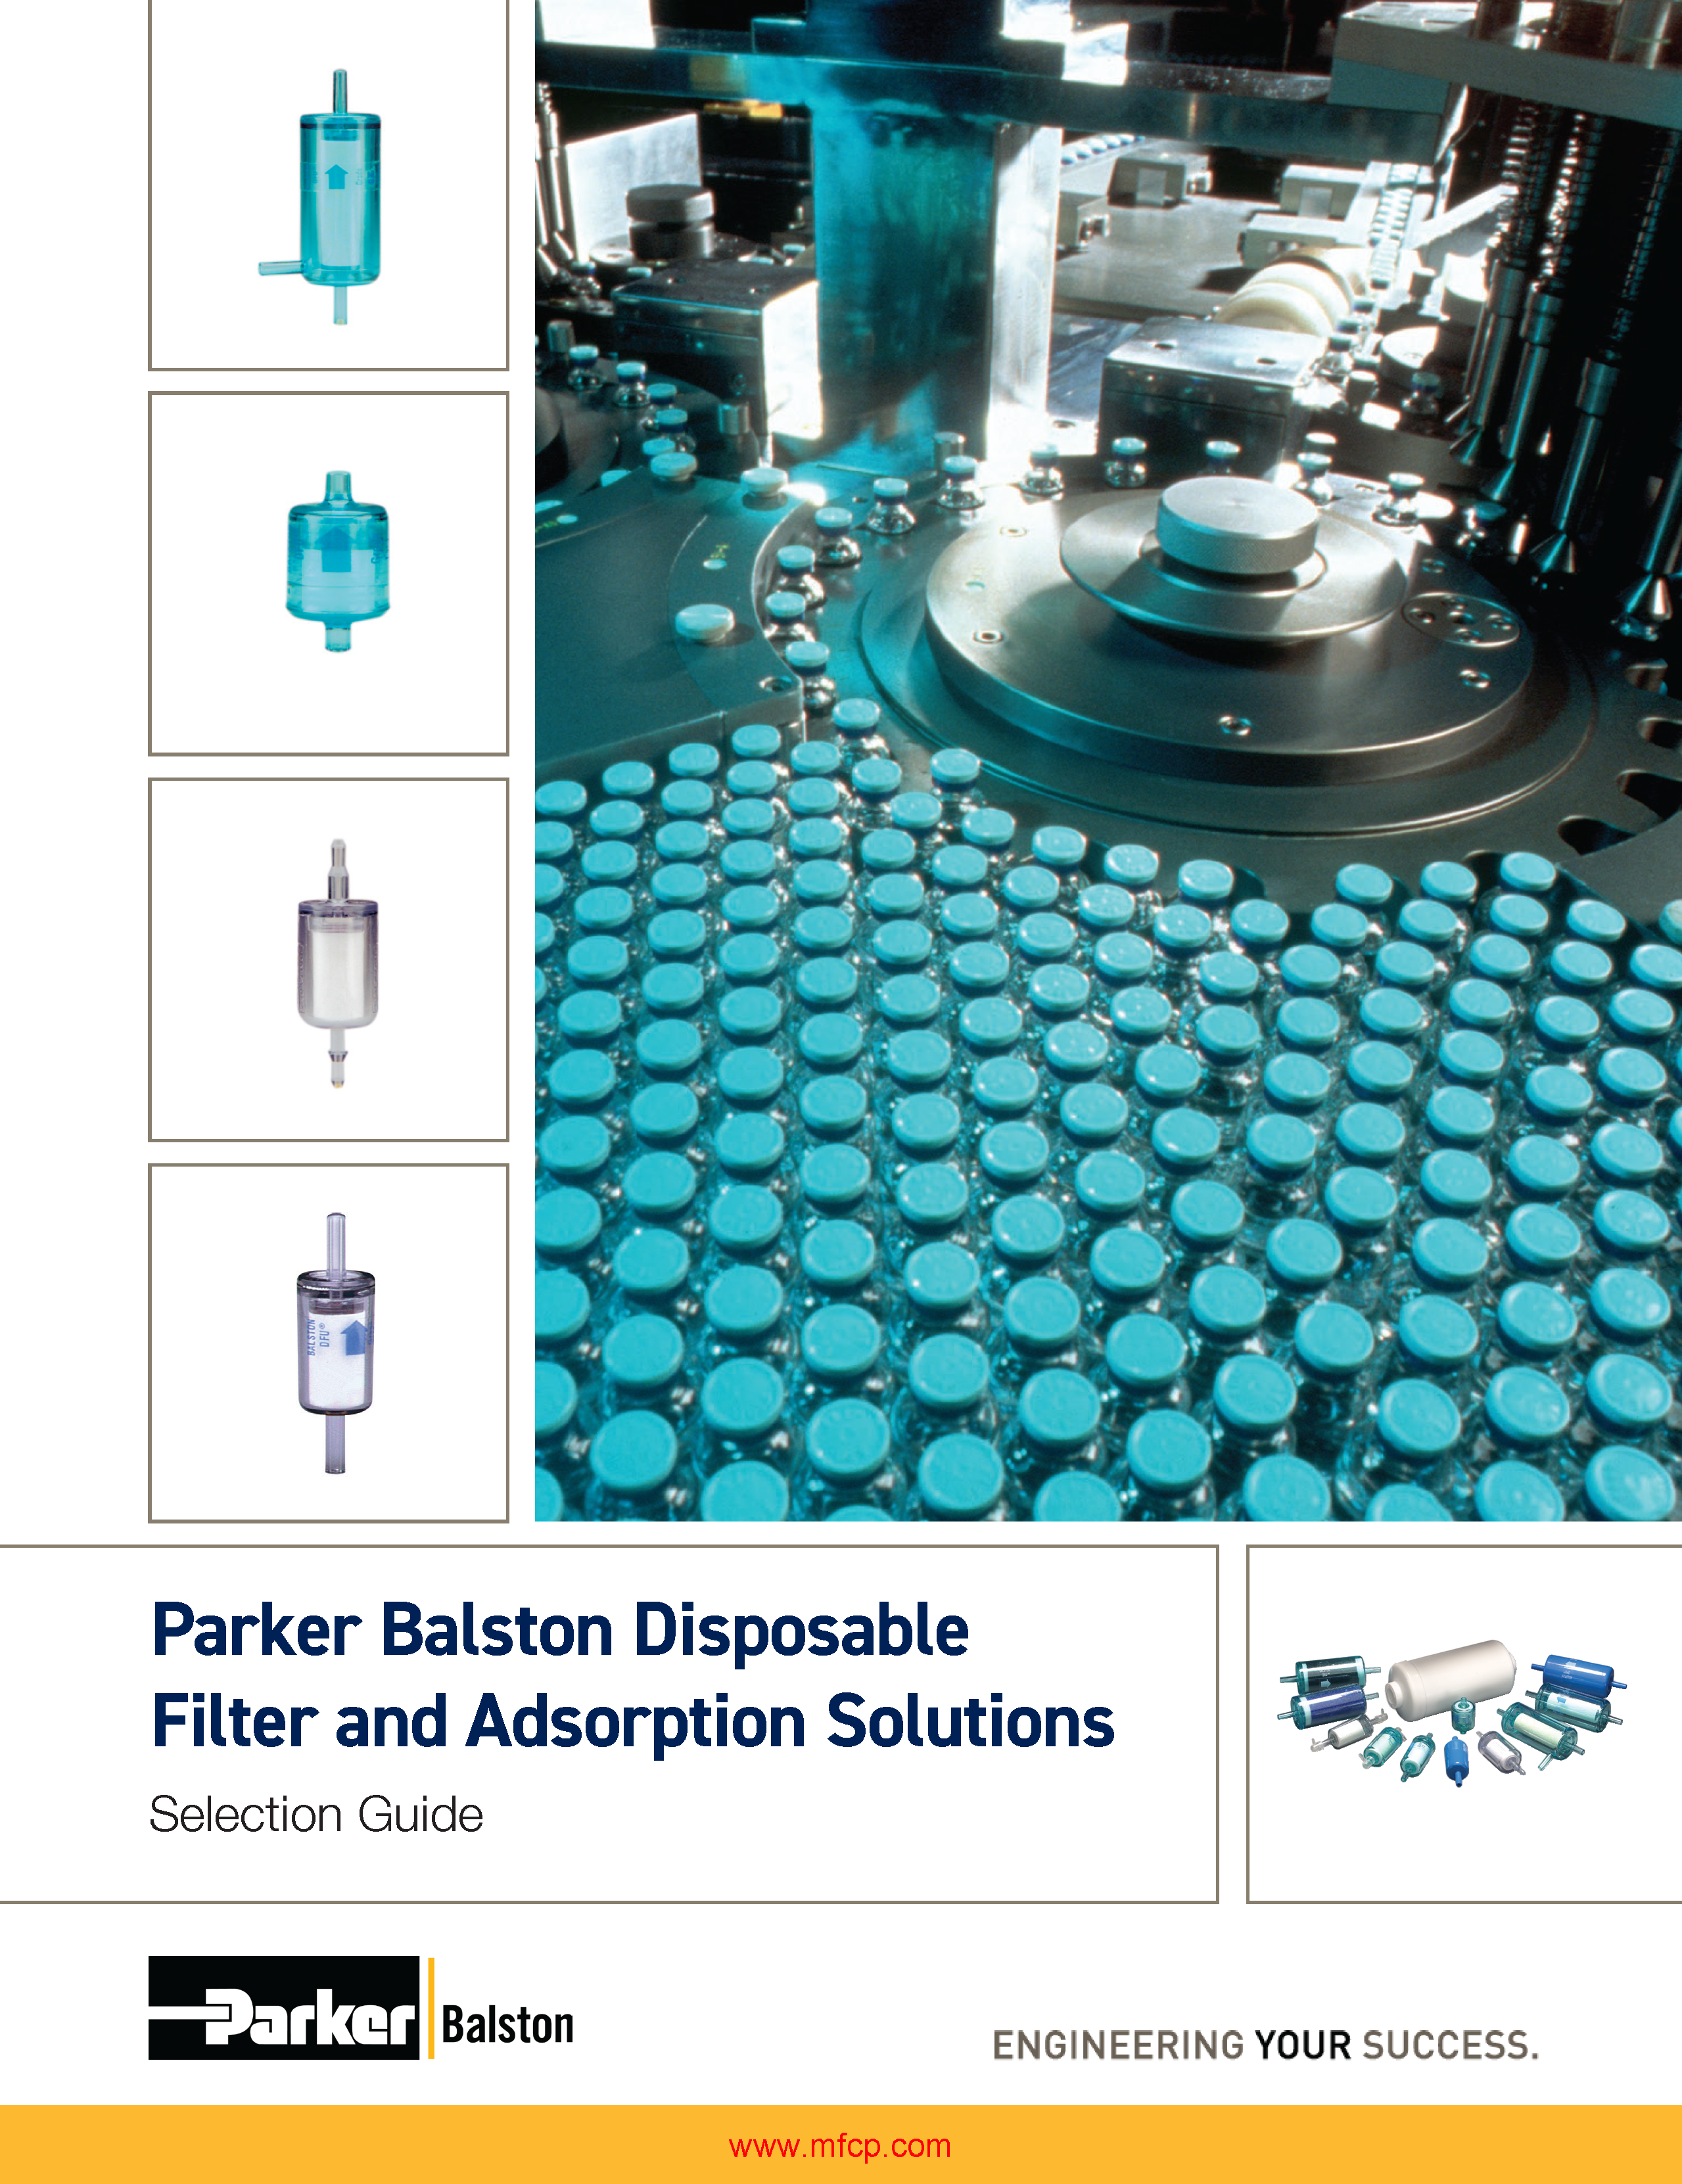 Parker Balston Disposable Filter Selection Guide 040